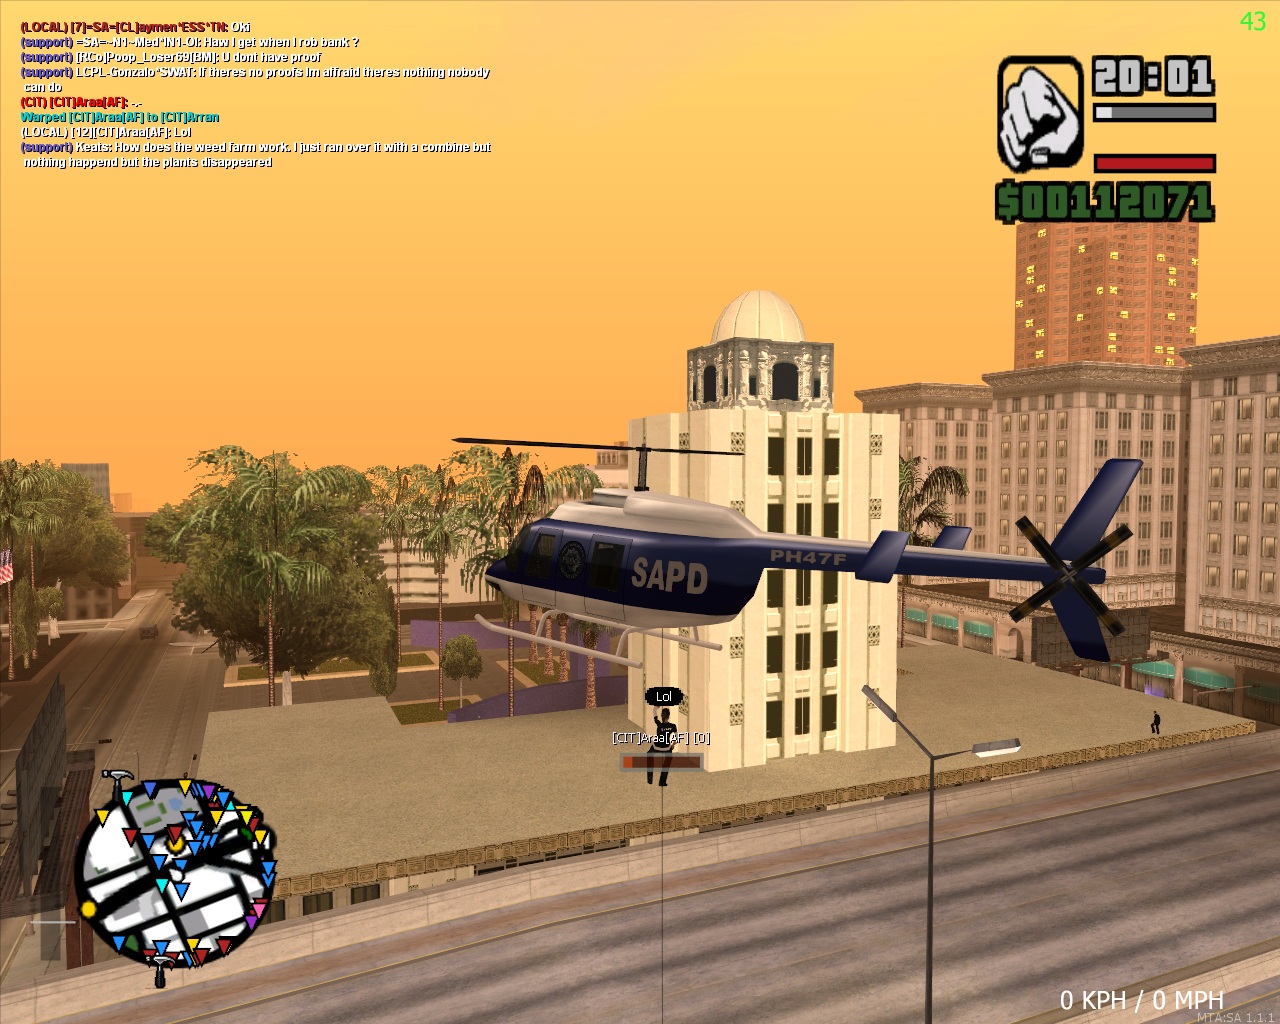 B Multi Theft Auto/b: San Andreas - Download.